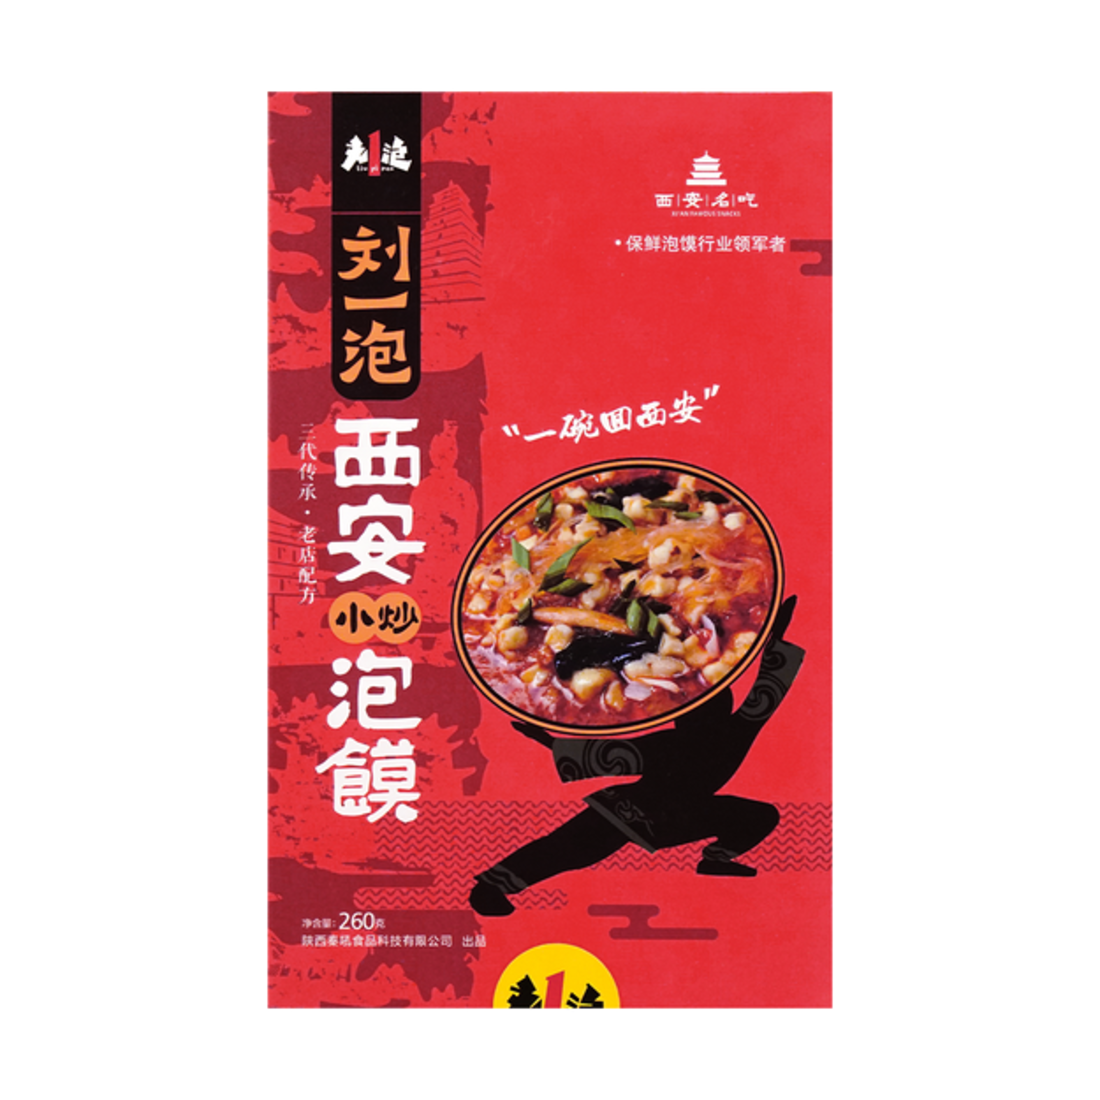 Liuyipao-Xi'an Fried Steamed Bun 260g